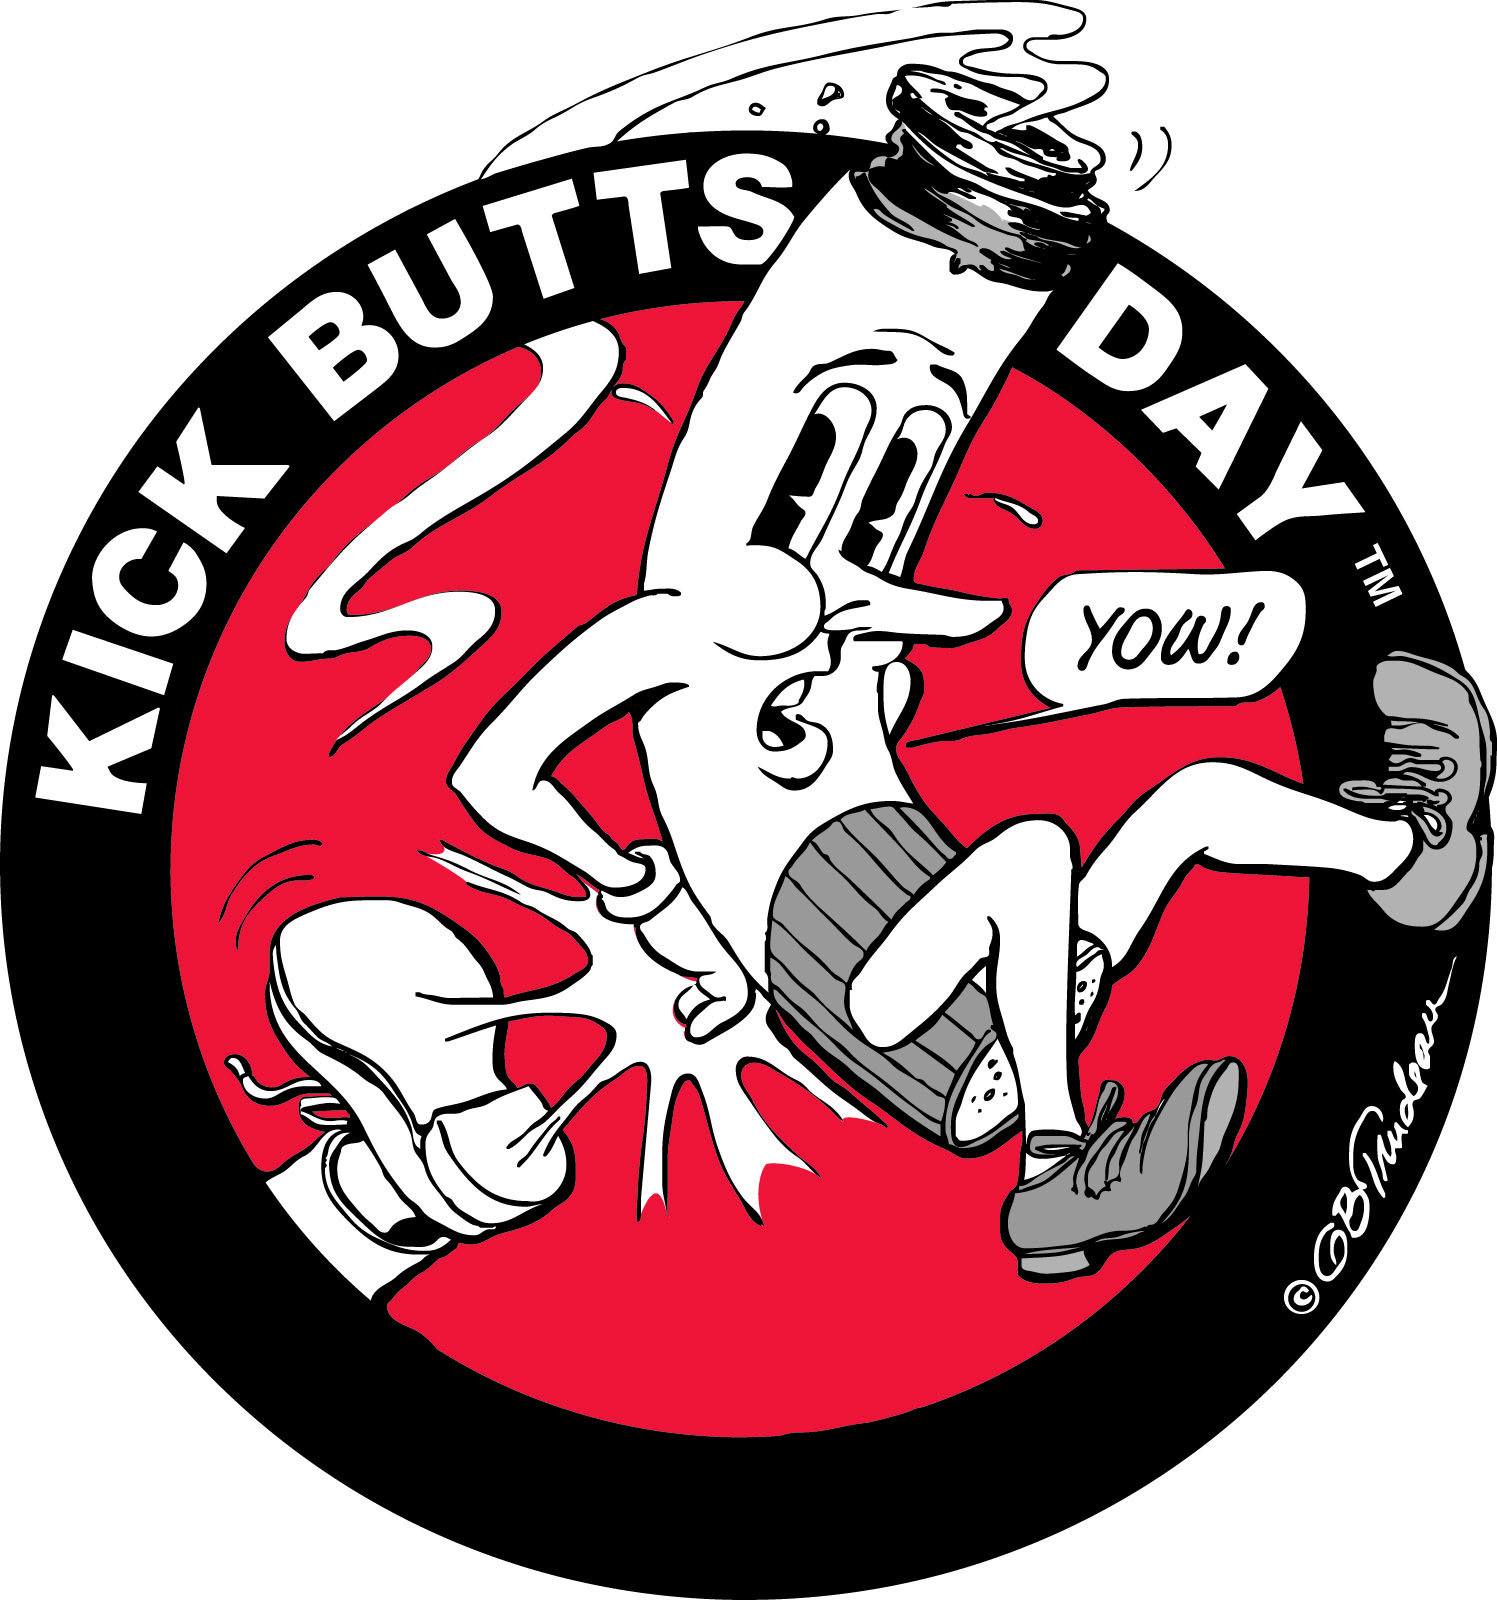 Washington Kids to ‘Kick Butts’ on March 15